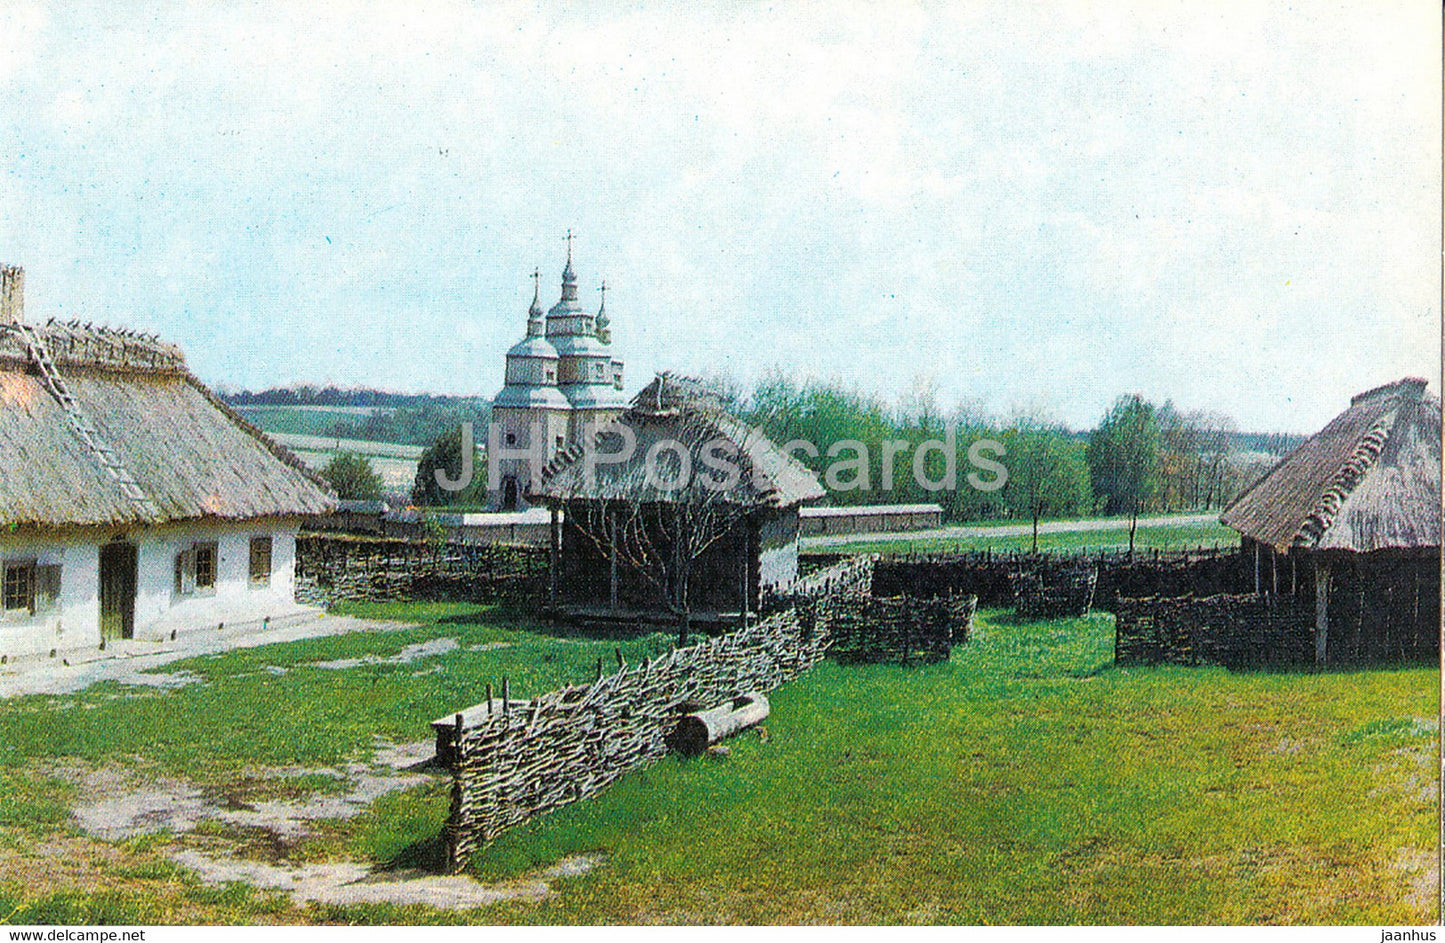 Museum of Ukrainian Folk Architecture and Life - Middle Dnieper exposition - 1977 - Ukraine USSR - unused - JH Postcards